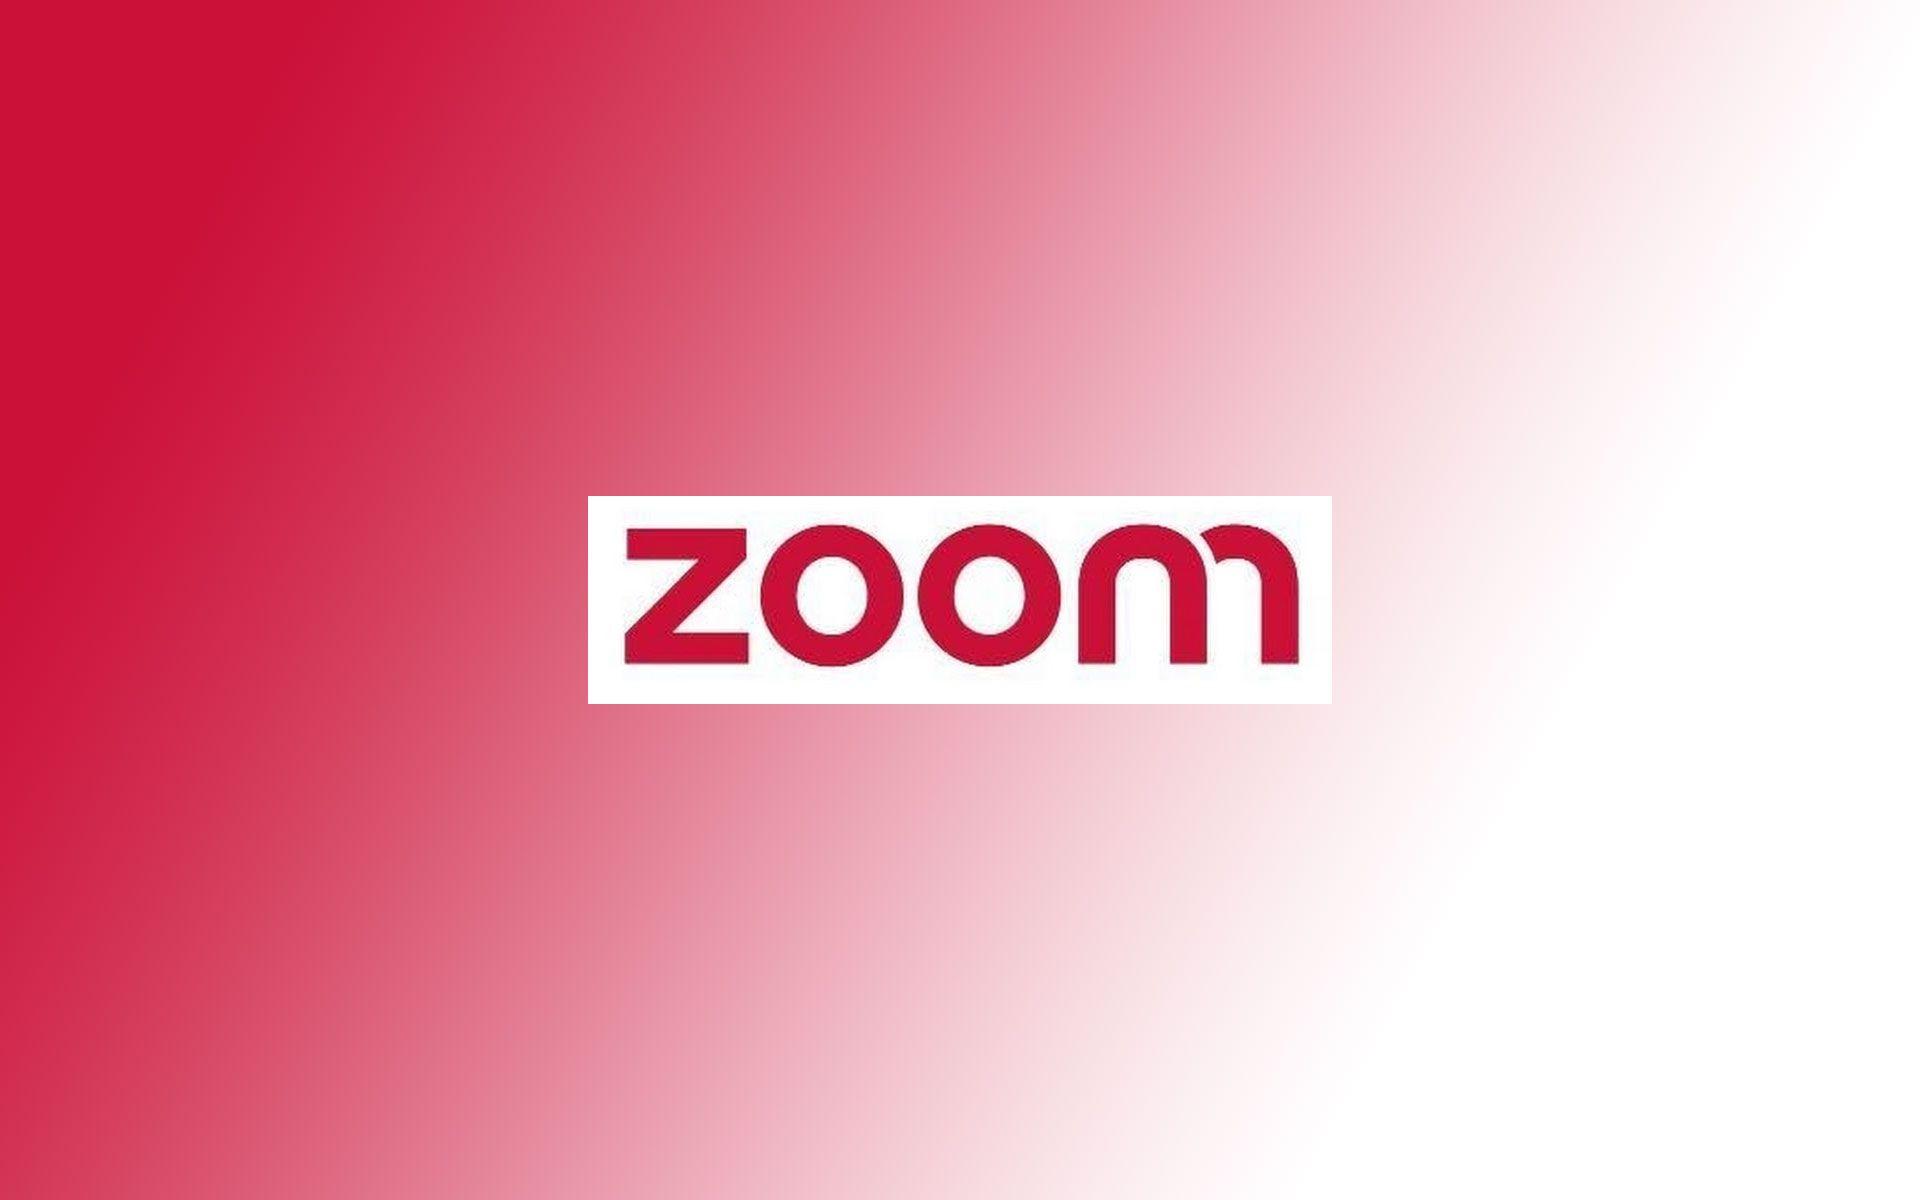 Zoomtv Logo - Zoom TV to launch on Sky in UK? | BizAsia | Media, Entertainment ...